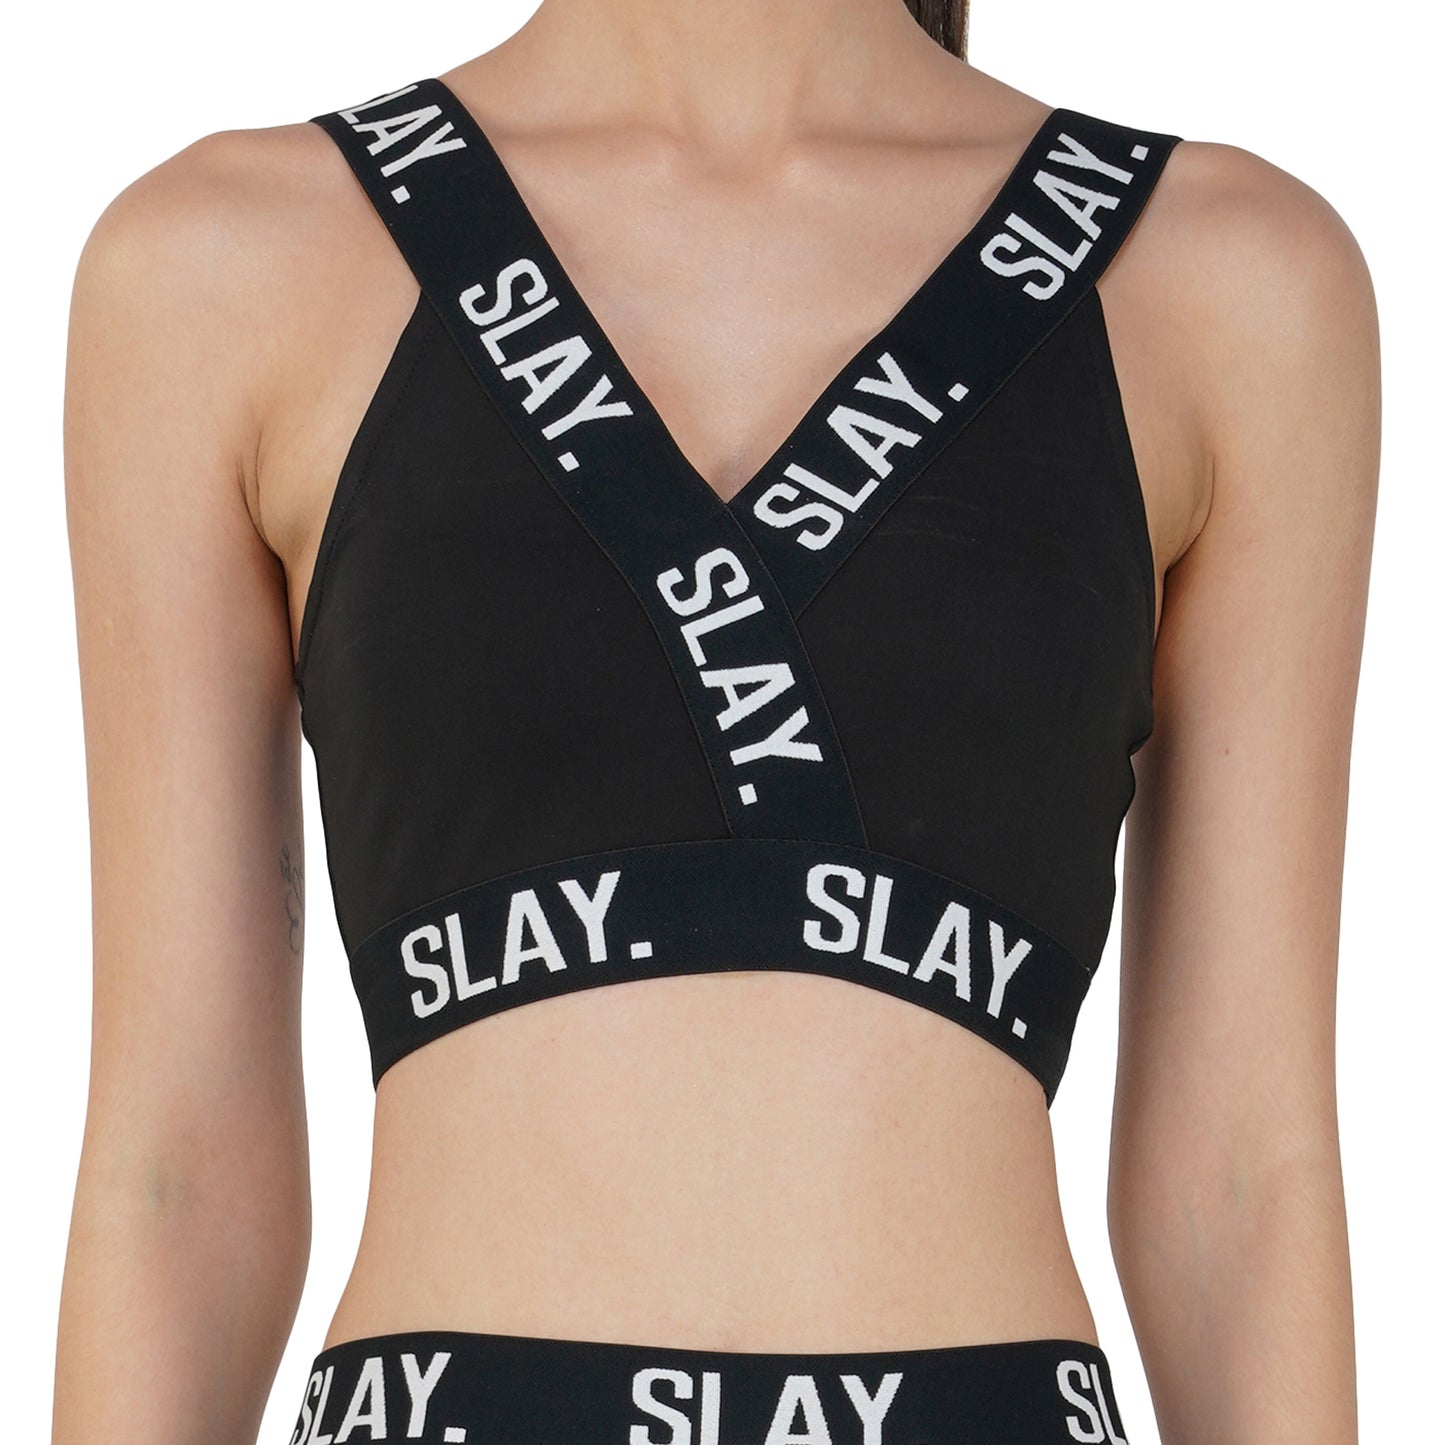 SLAY. Sport Women's Activewear Full Sleeves Crop Top And Pants Co-ord Set Black